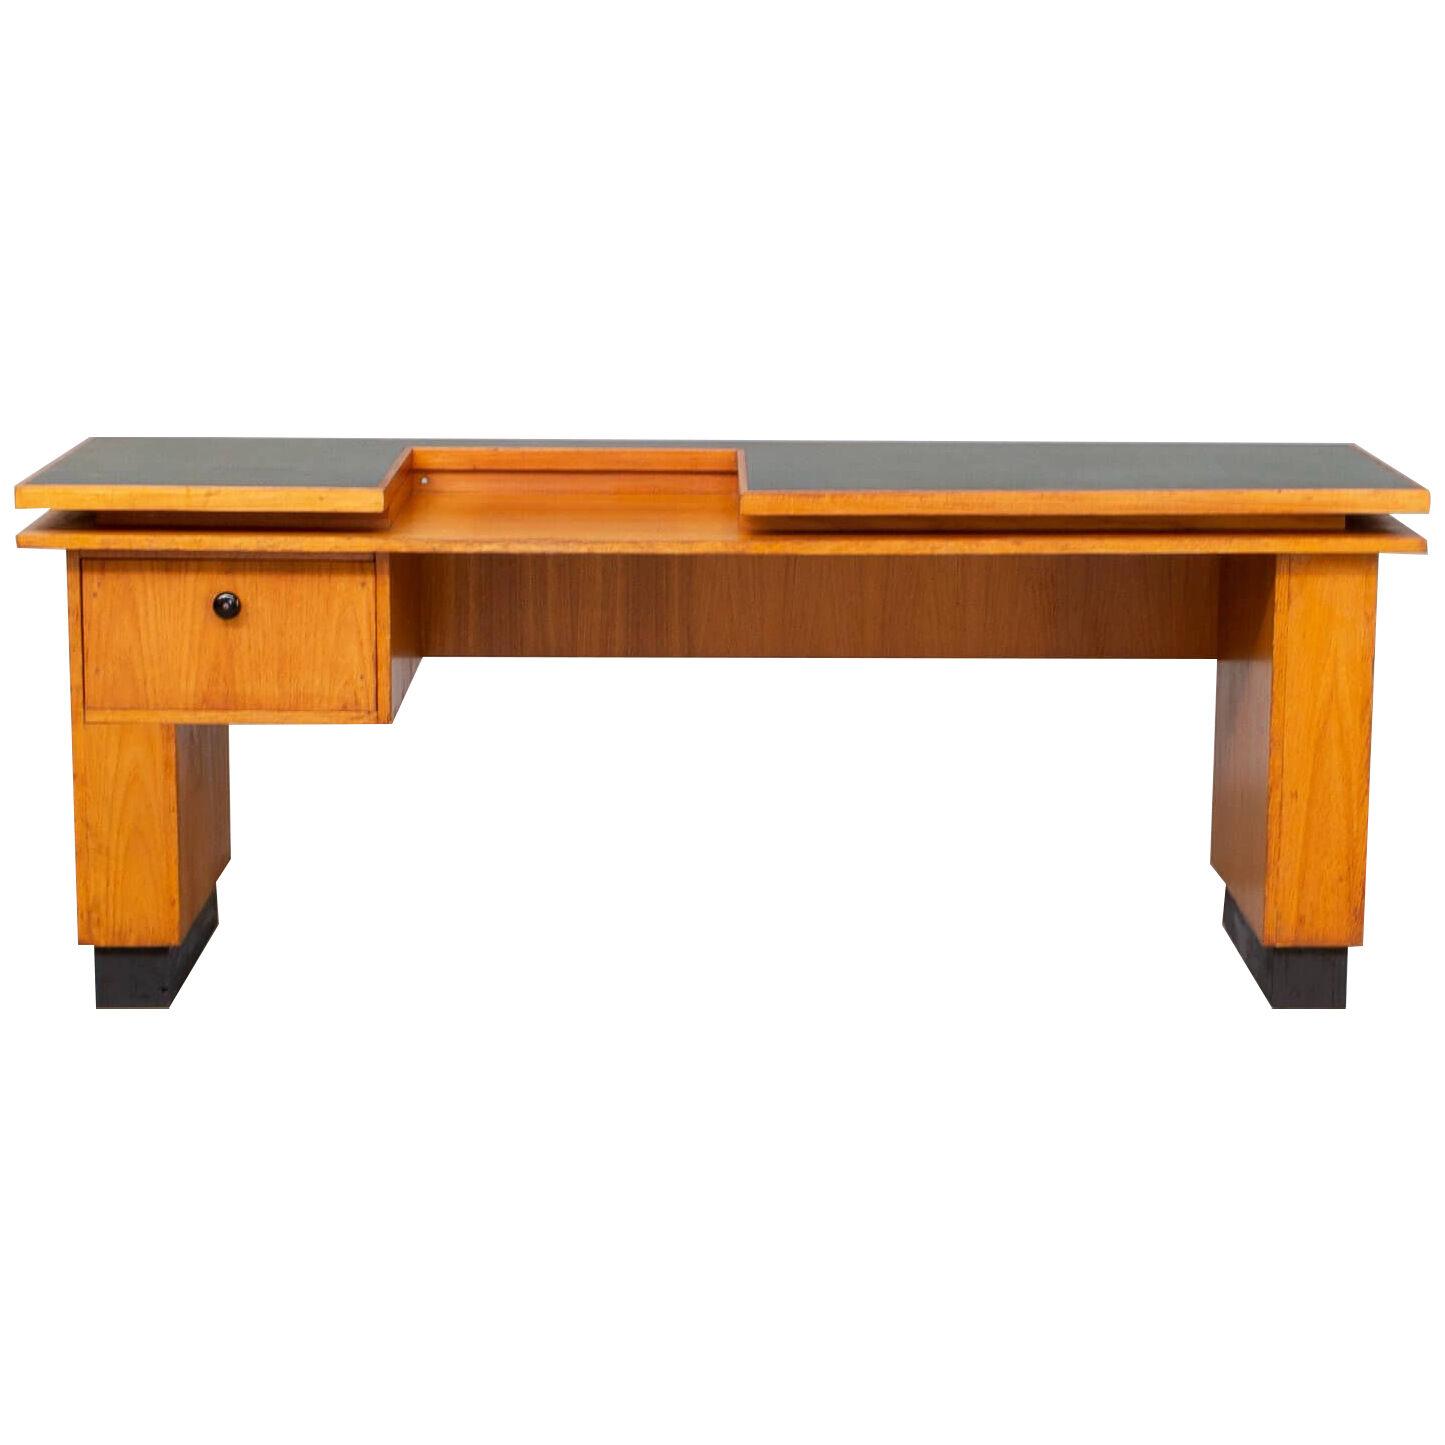 60s double table top oak wooden writing desk by gebr Verhouden for Philips